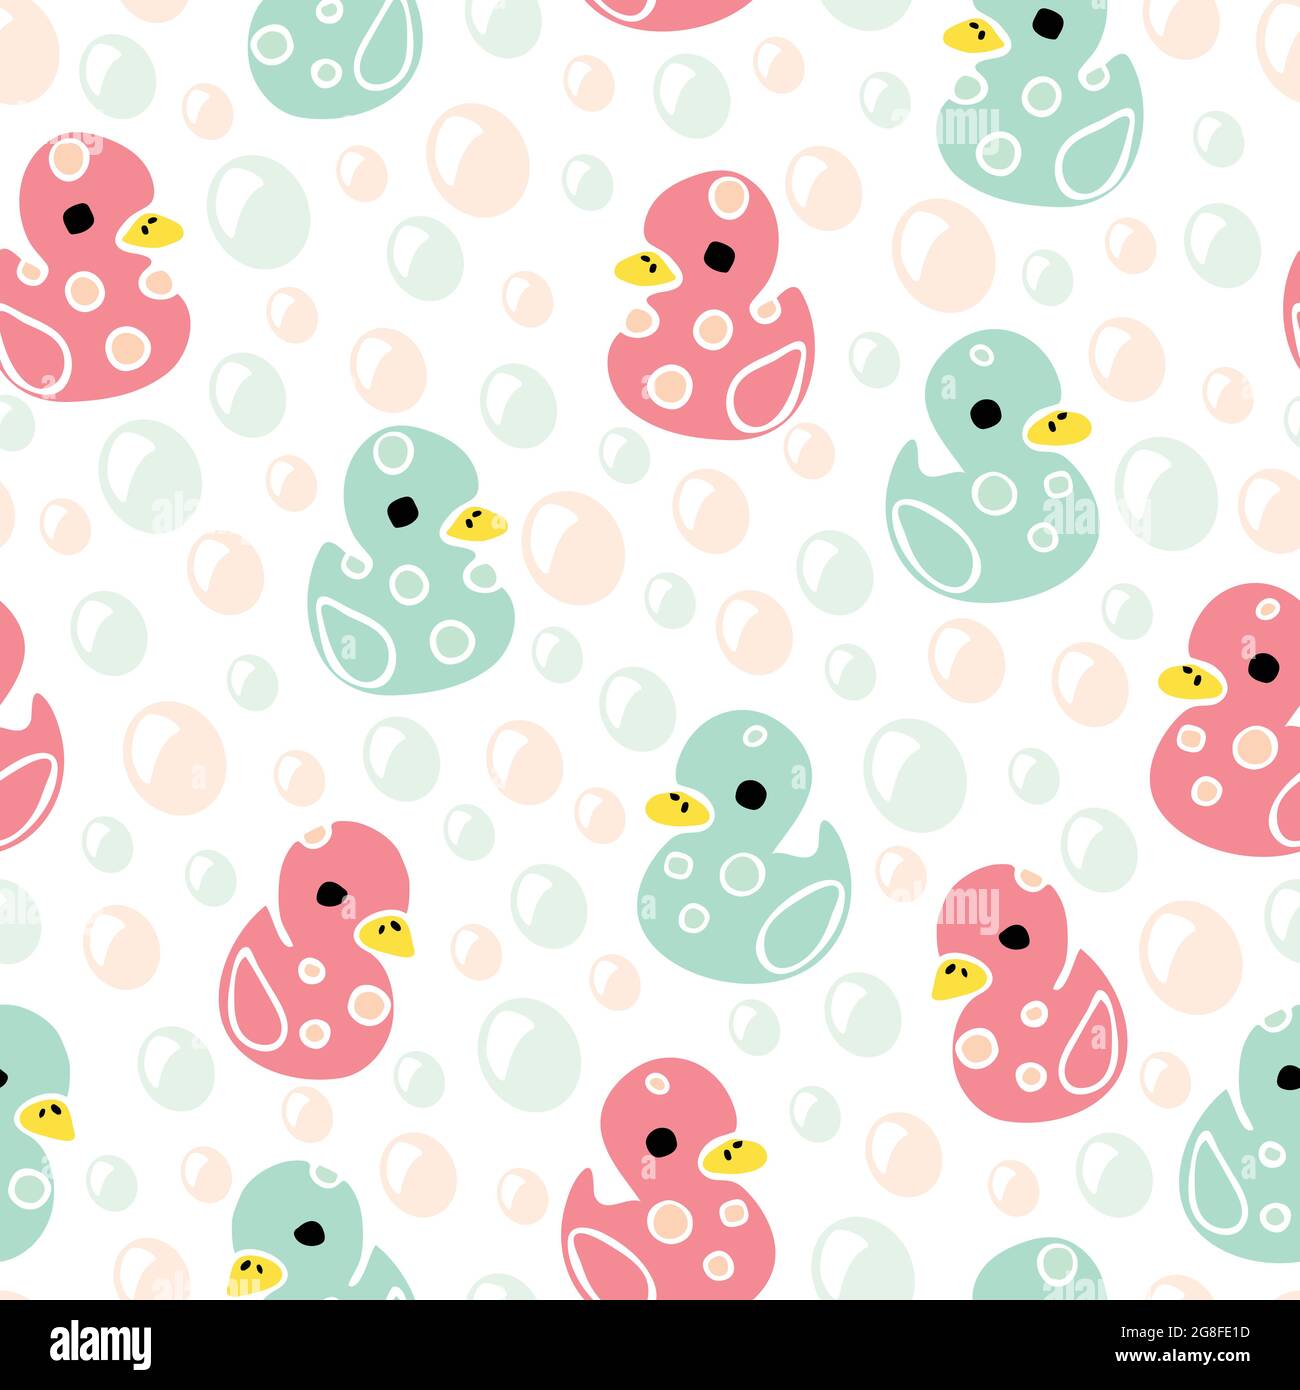 Premium Vector  Cute duck seamless pattern design illustration animal  background